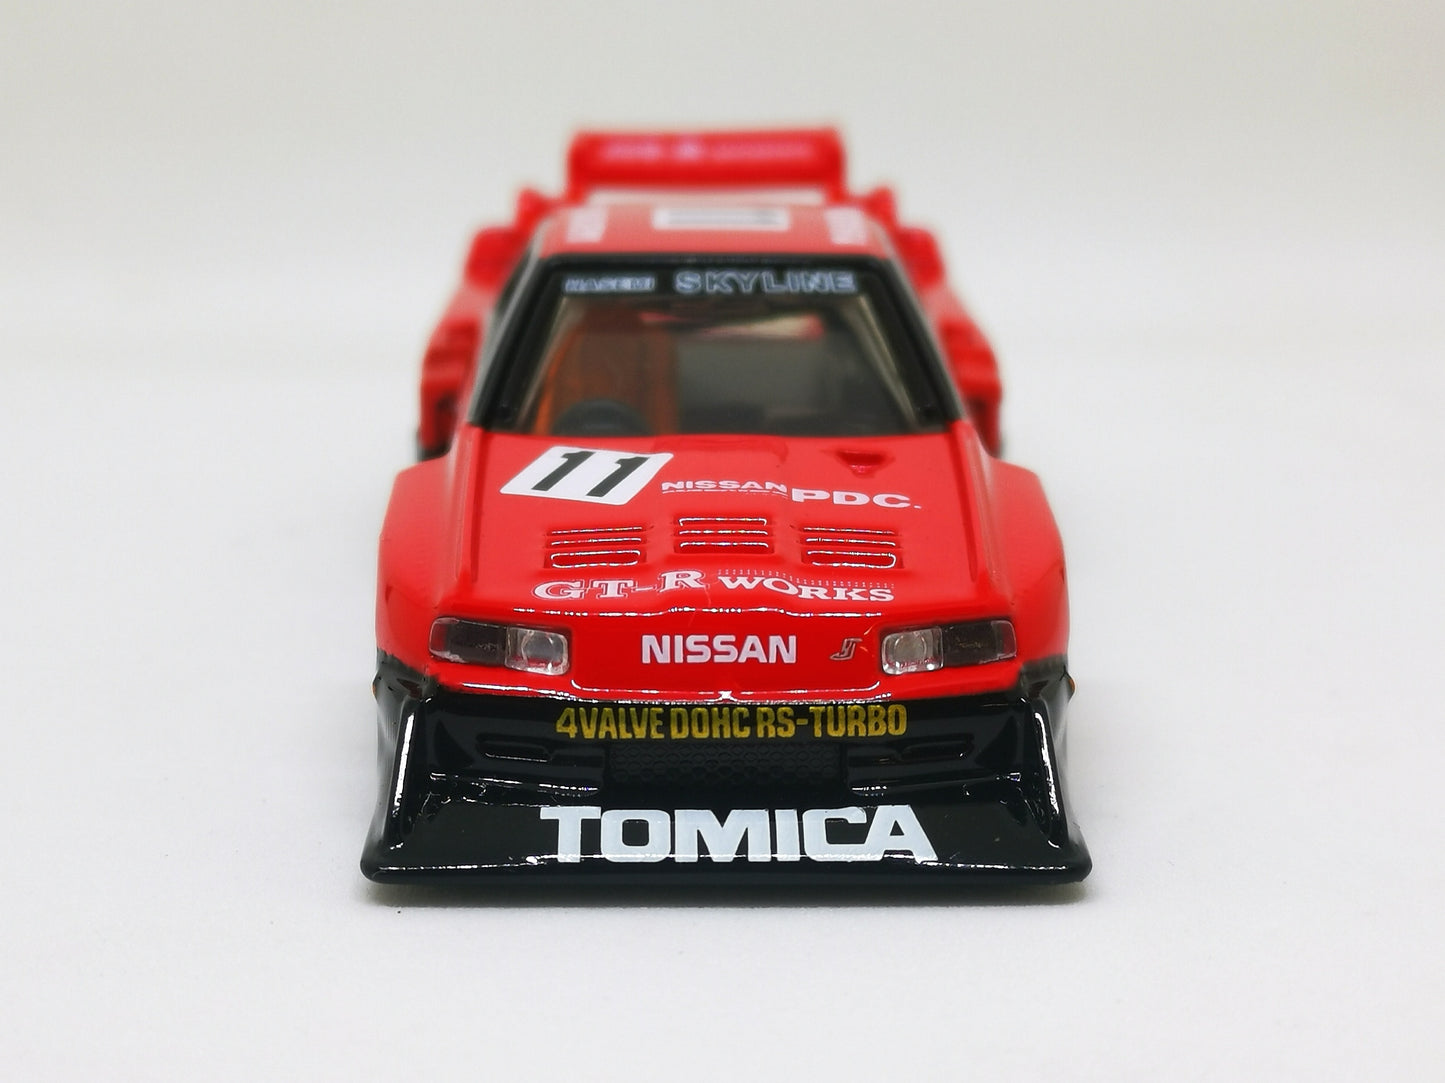 Tomica Premium 01 Nissan Skyline Turbo Super Silhouette 1:67 SCALE NEW IN Box